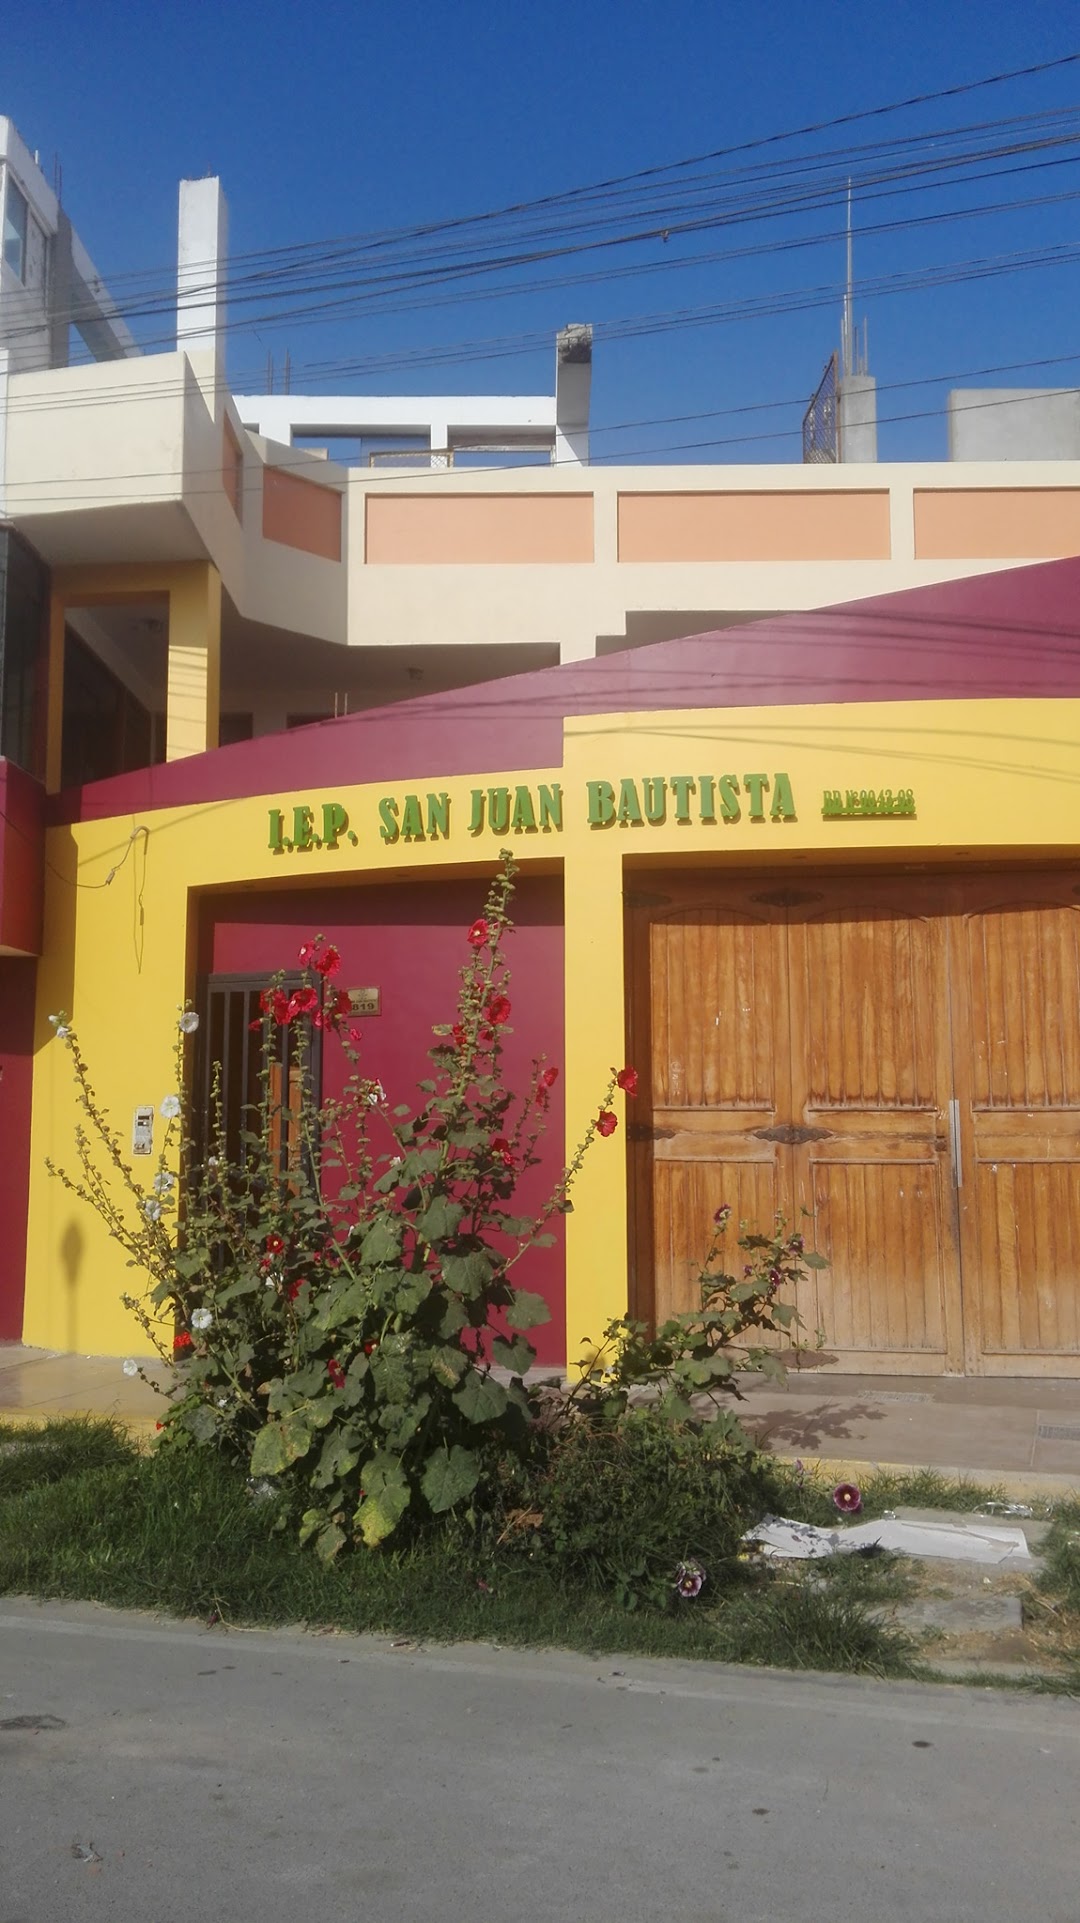 I.E.P. San Juan Bautista